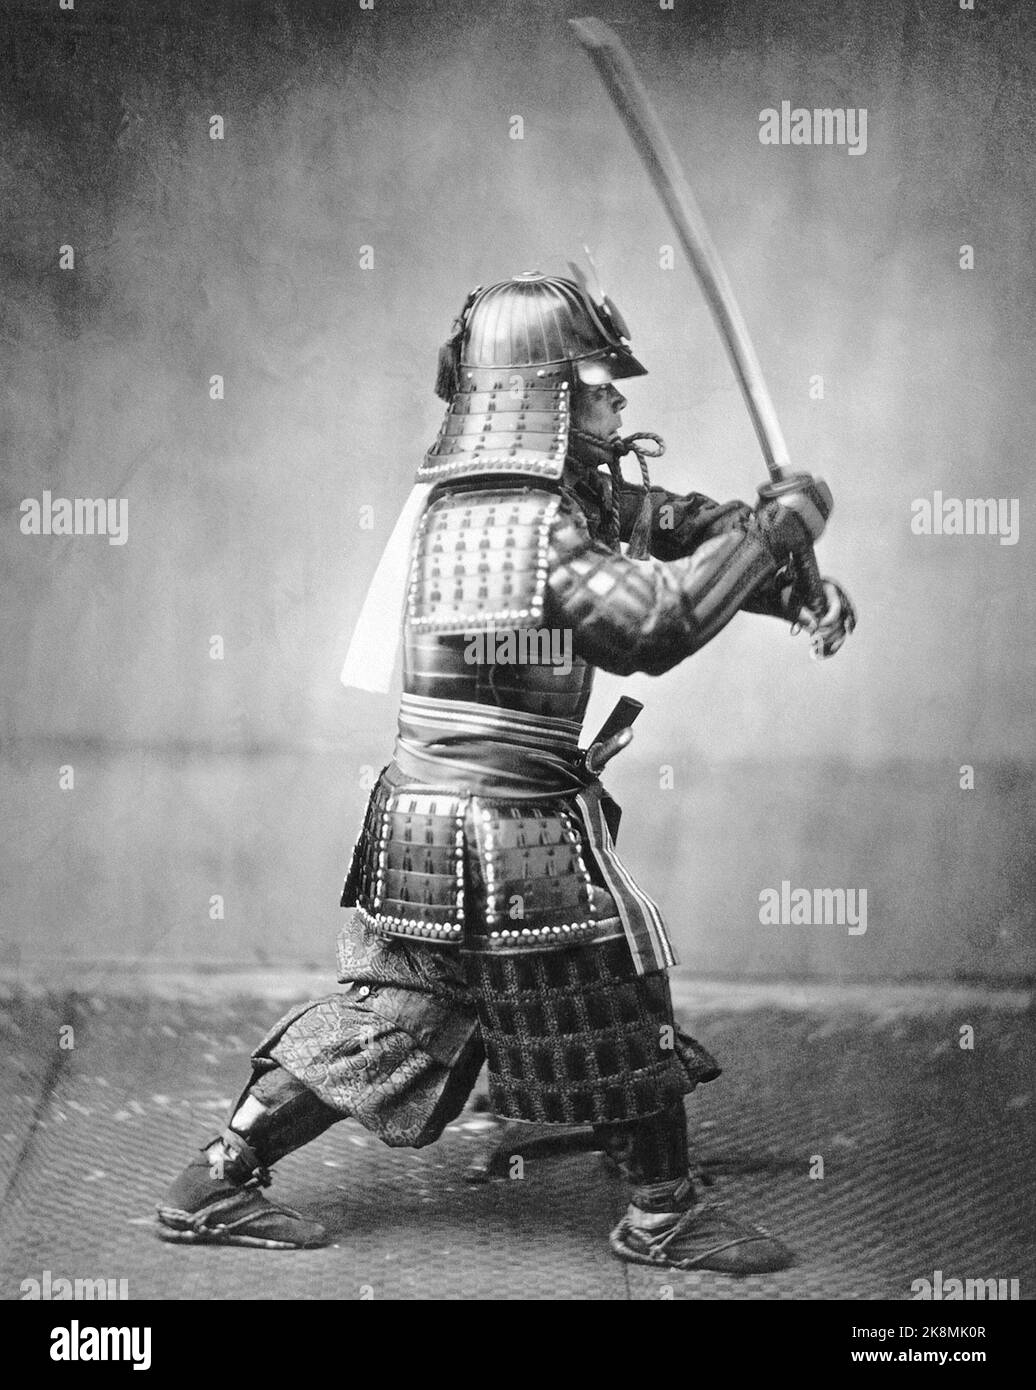 Felice Beato - Armoured Samurai with Sword and Dagger - c1860 - Felix Beato Stock Photo